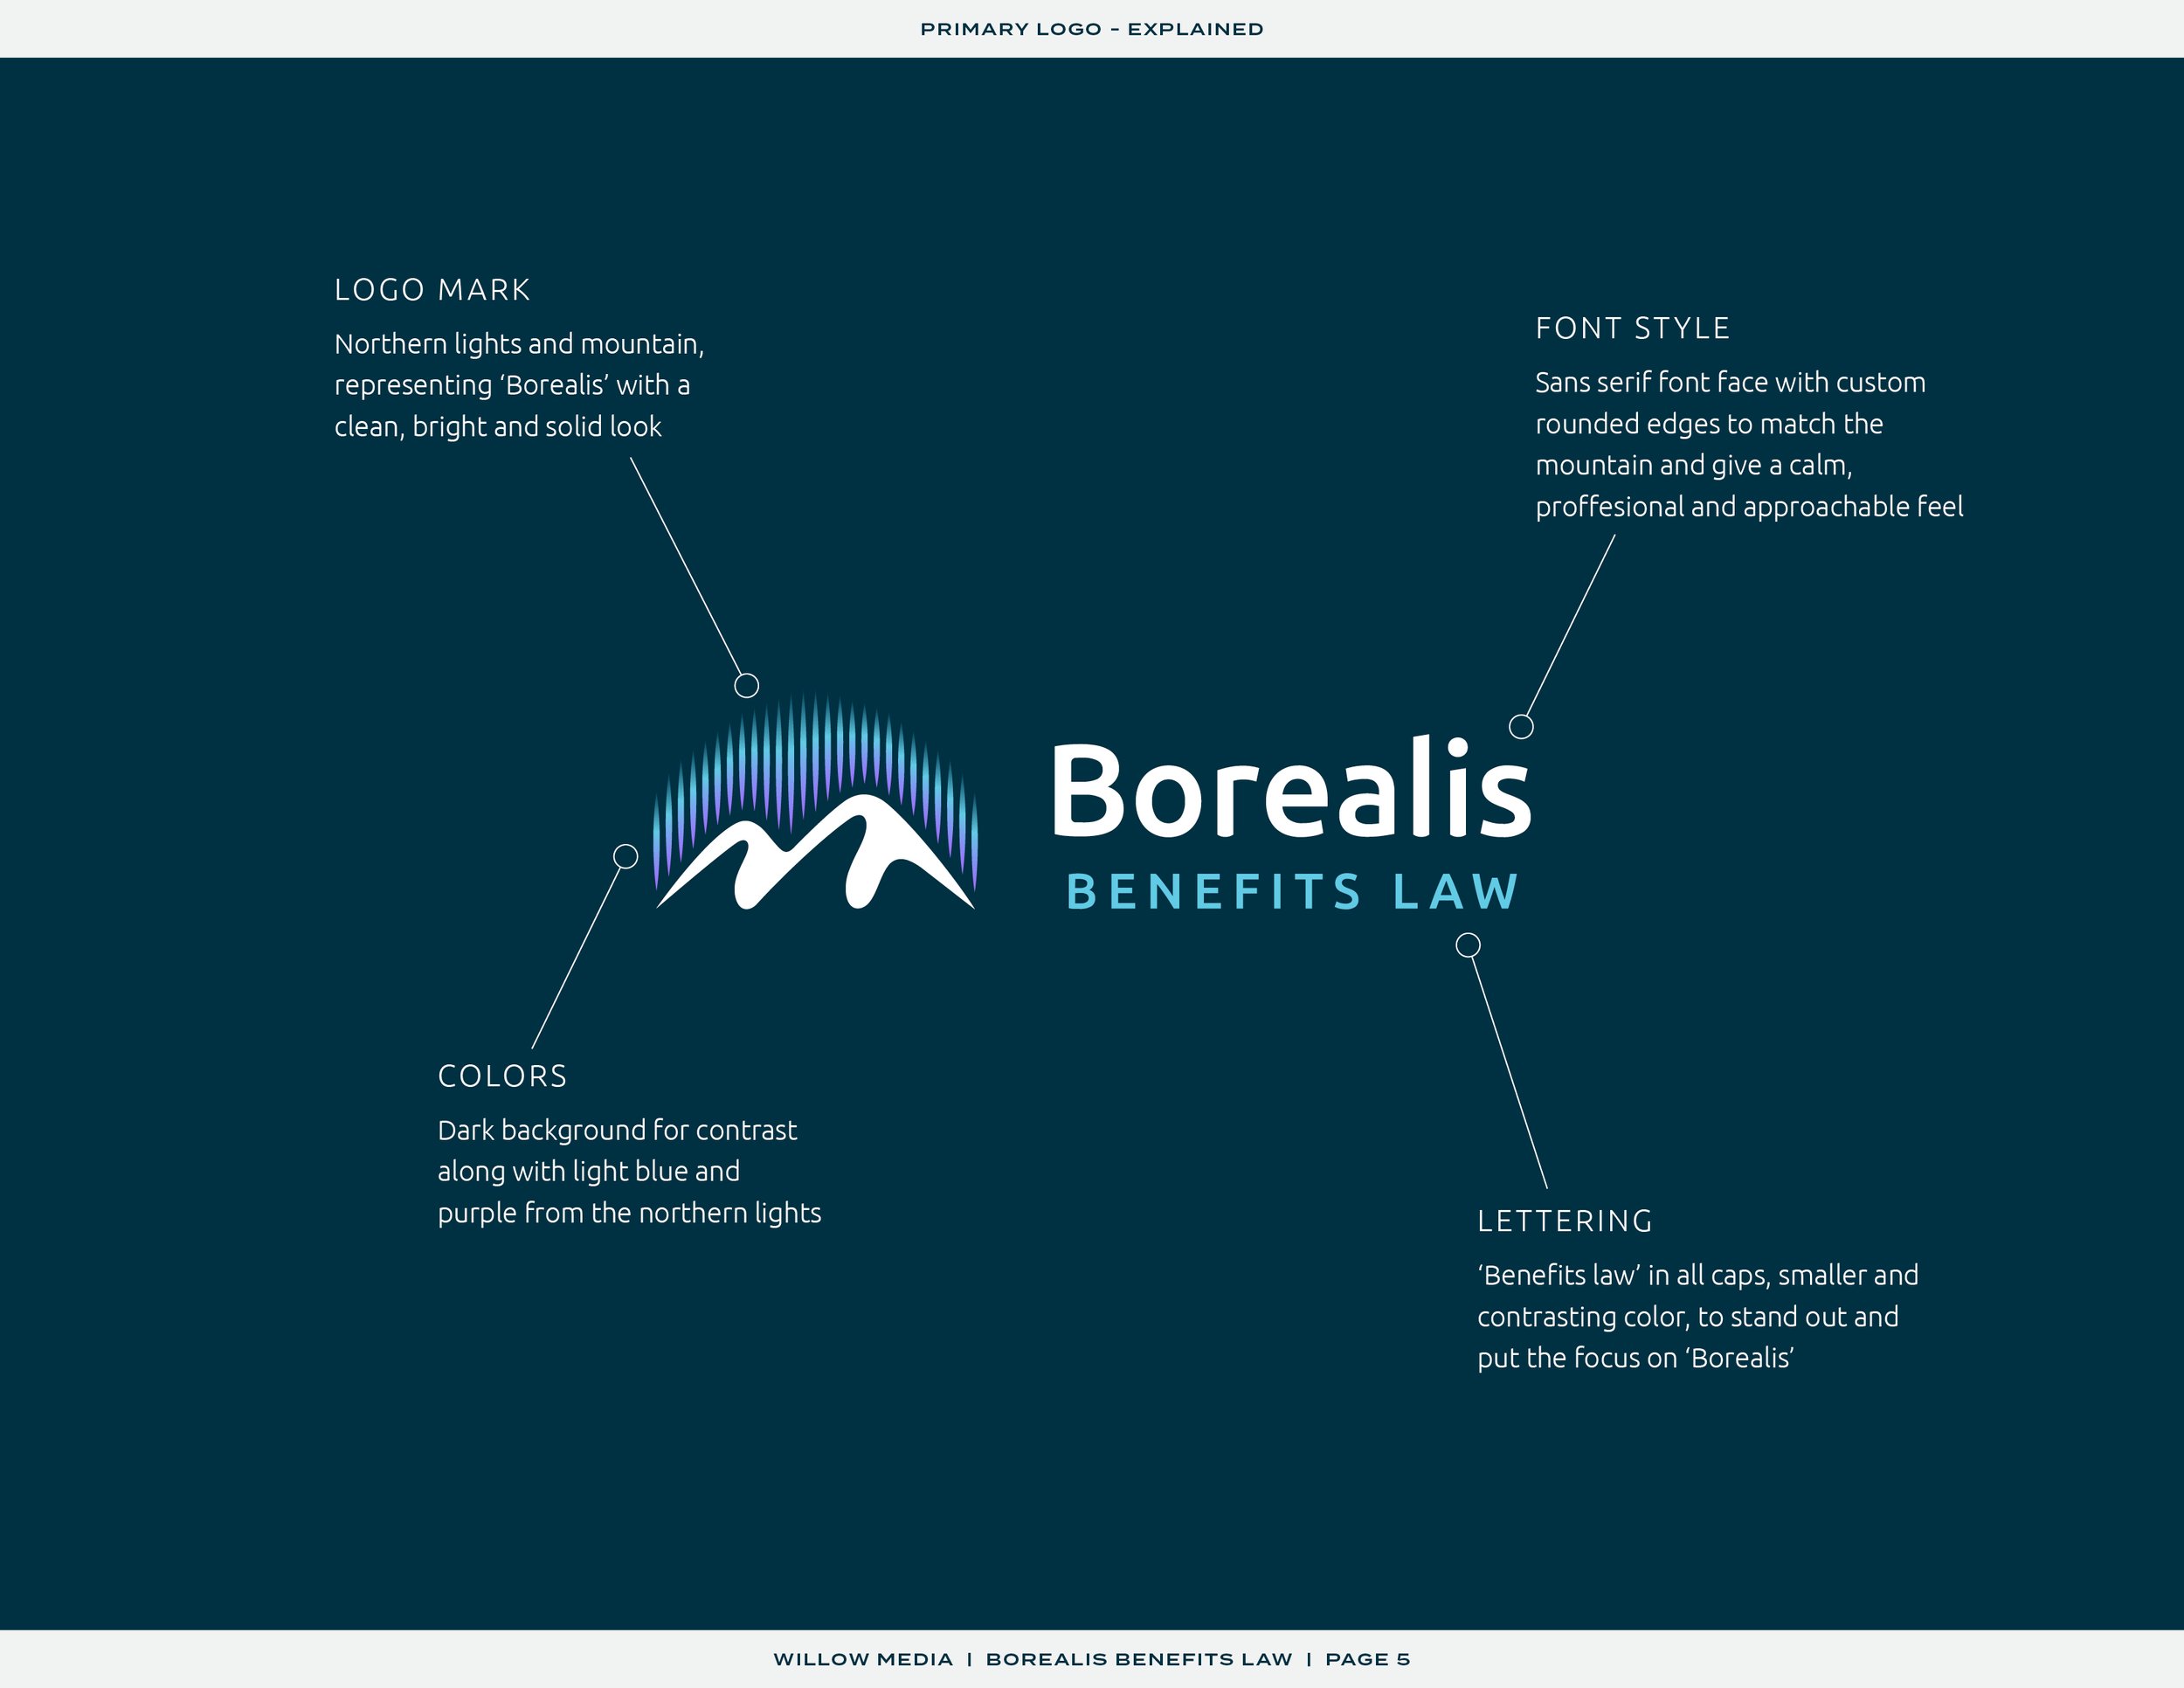 Borealis Benefits Law Brand Presentation | Willow Media5.jpg